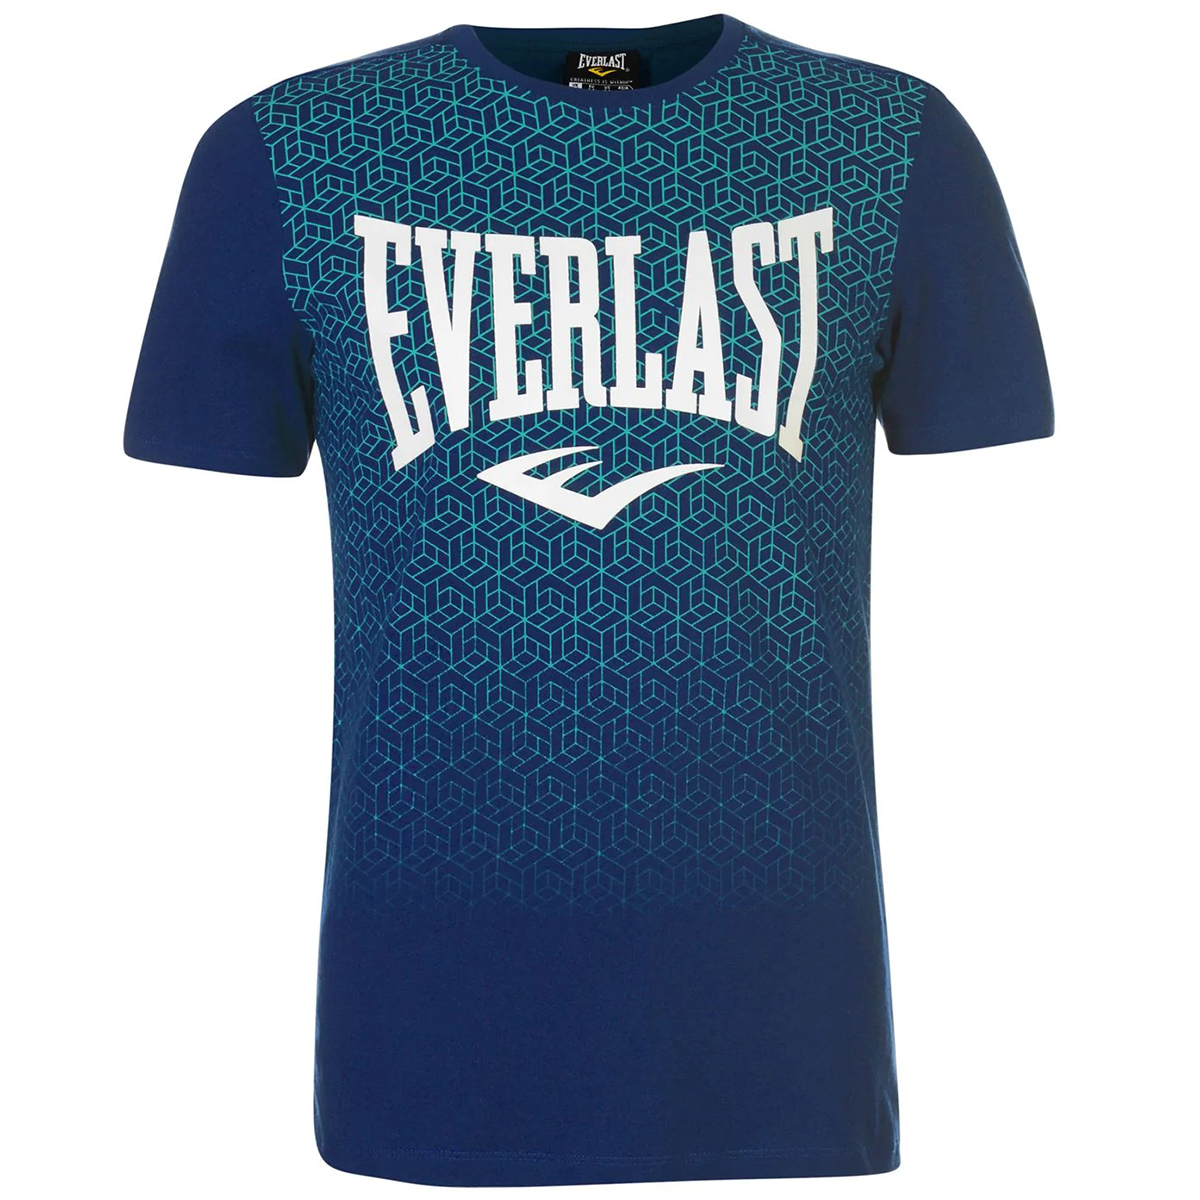 Everlast Men's Geo Print Short-Sleeve Tee - Blue, XS